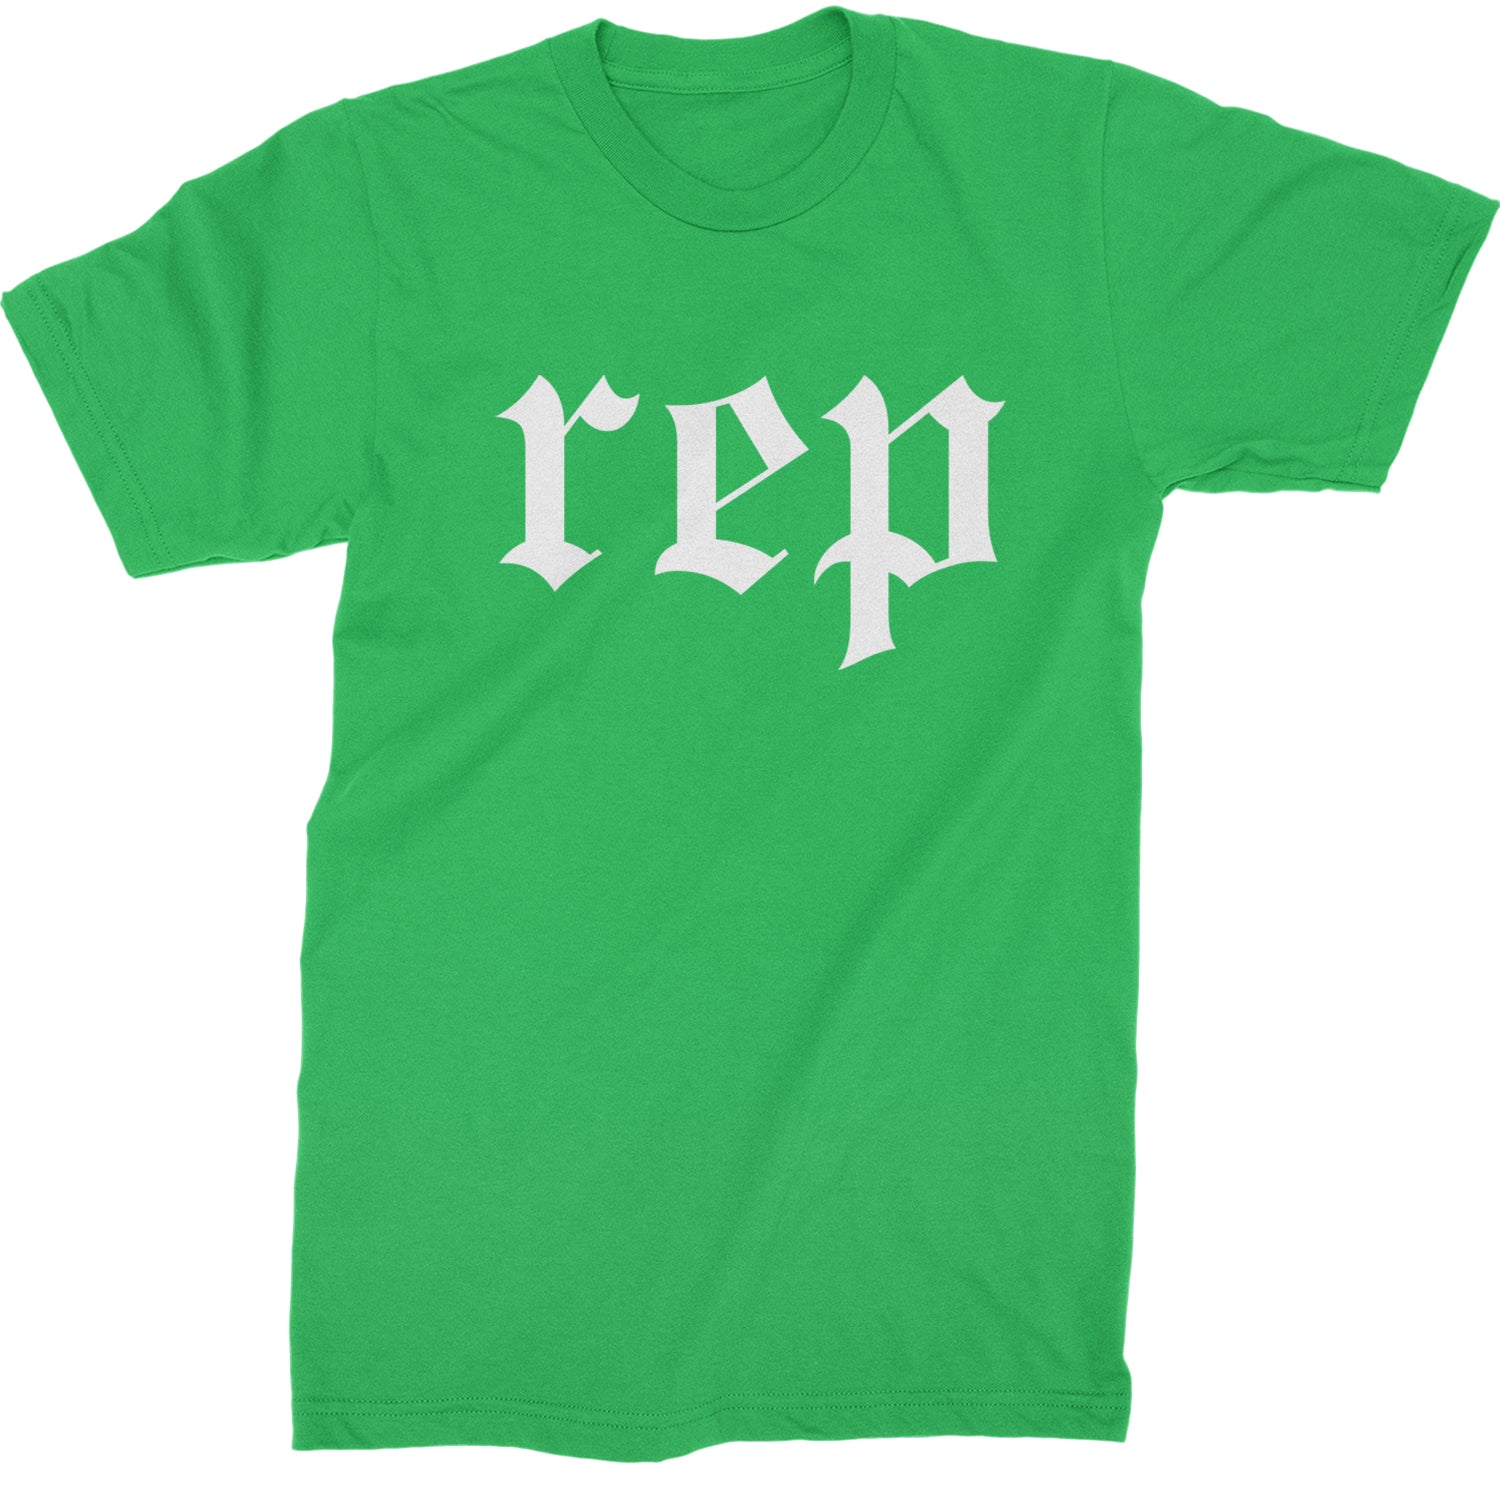 REP Reputation Eras Music Lover Gift Fan Favorite Mens T-shirt Kelly Green